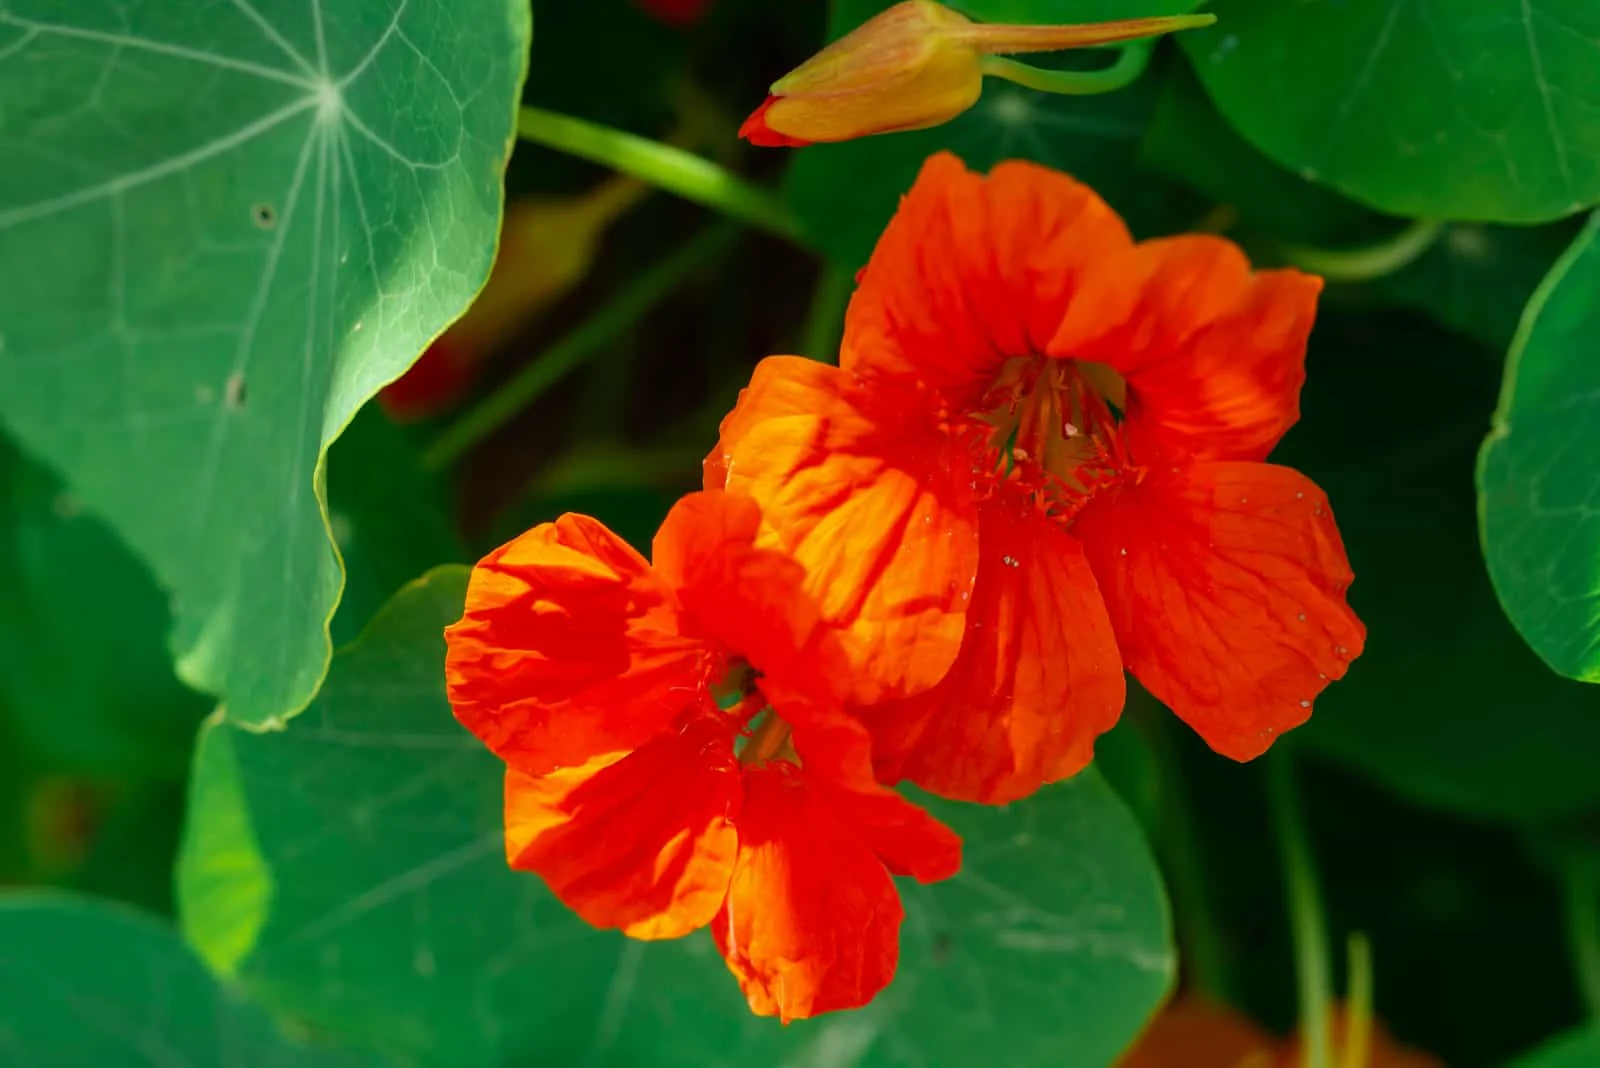 Flaming orange flower of garden nasturtium